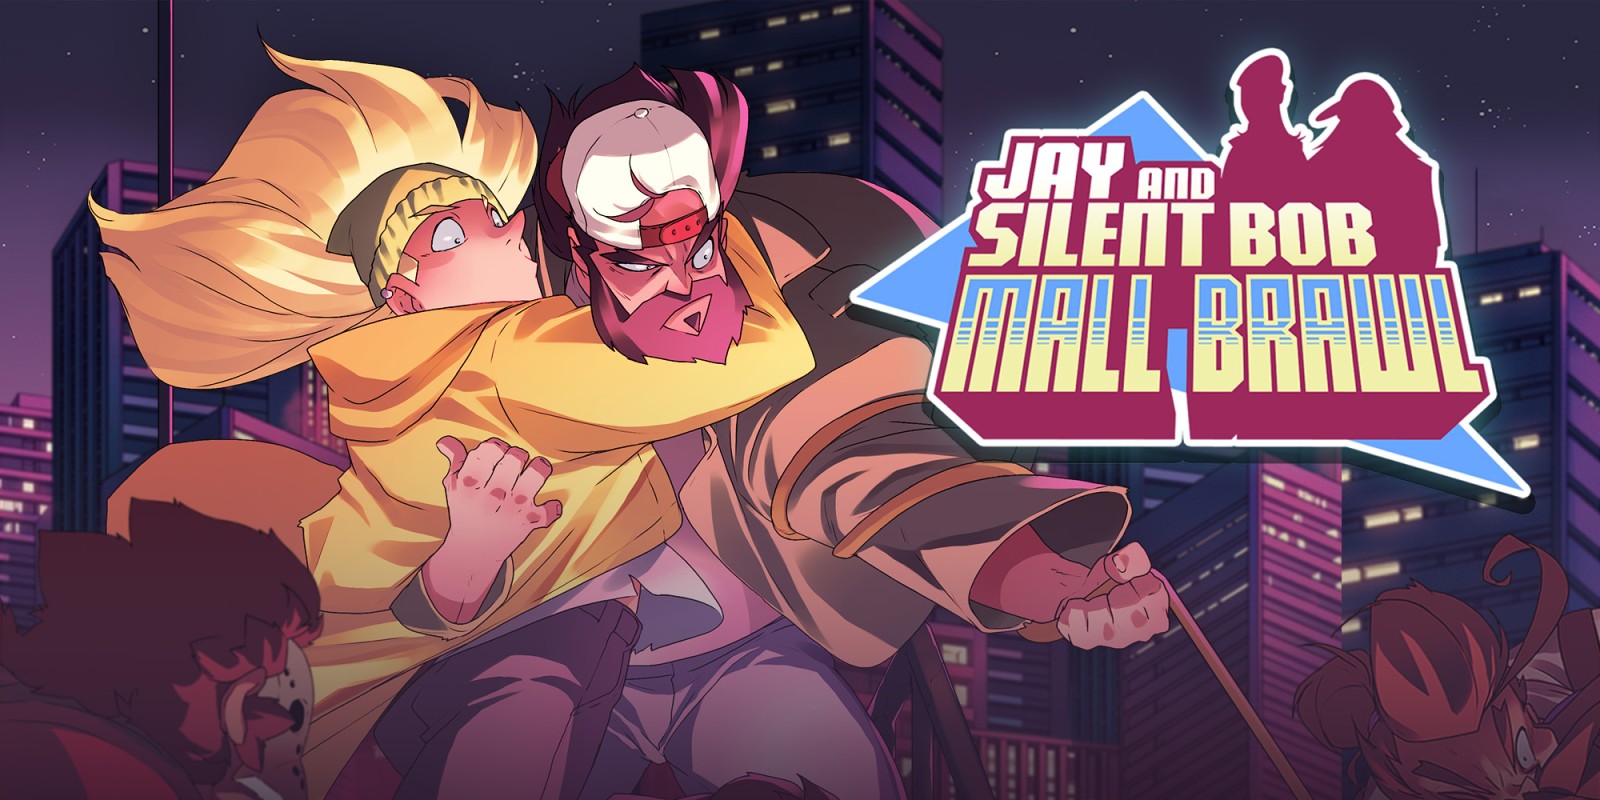 jay-and-silent-bob-mall-brawl